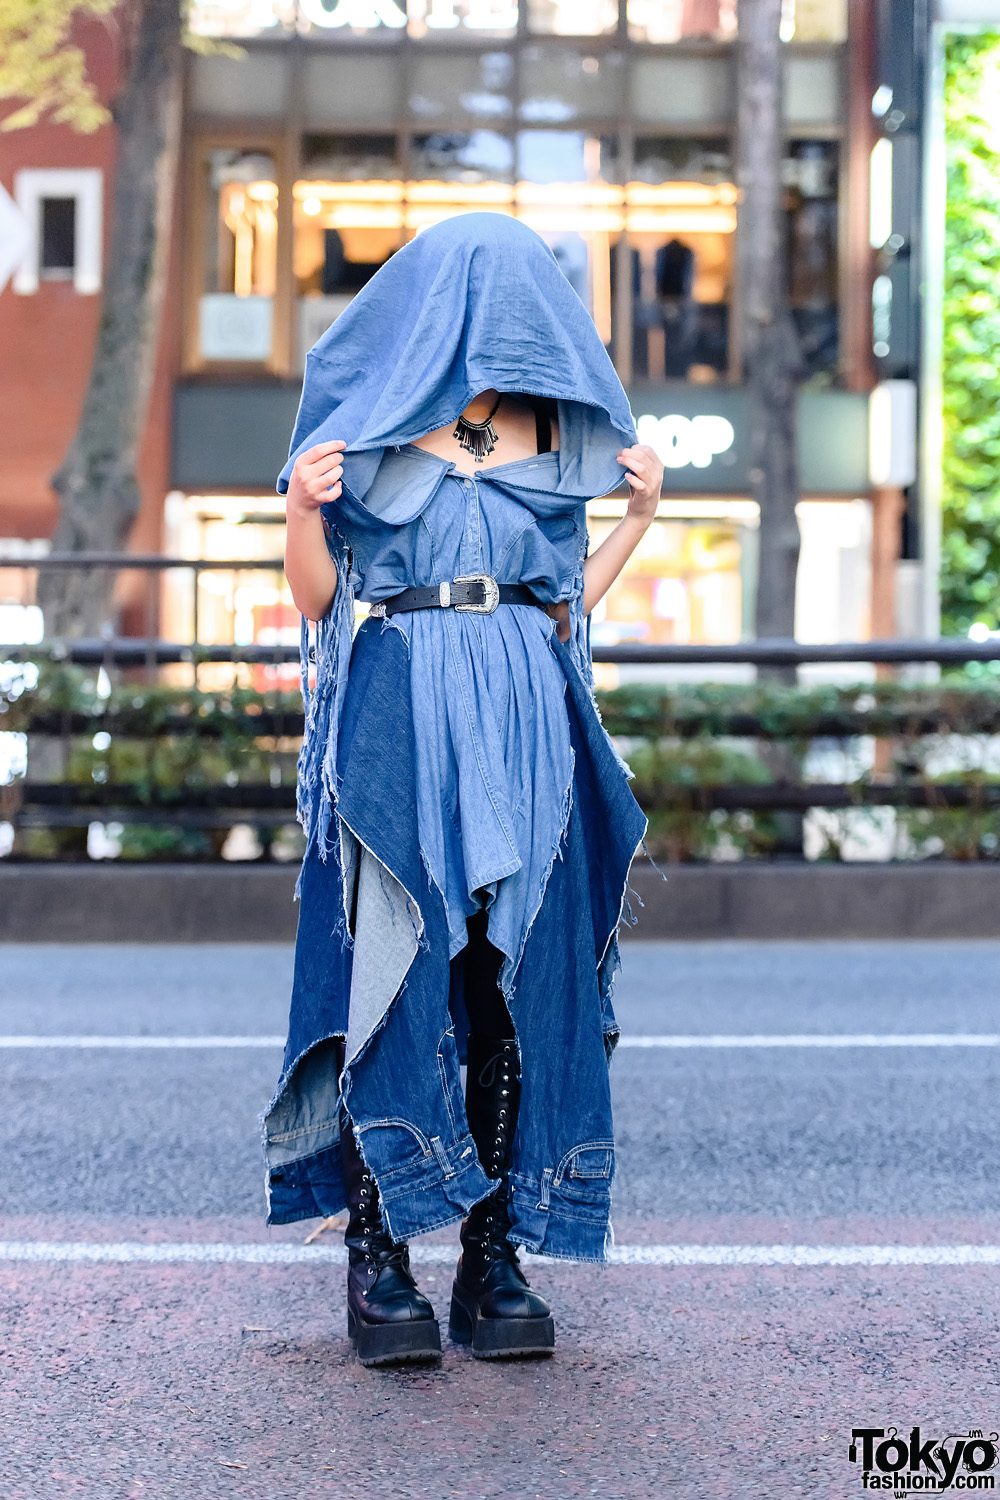 Deconstructed Denim Tokyo Street Style w/ Fringe Necklace, Handmade Hooded Dress, Black Tights & Demonia Knee-High Boots